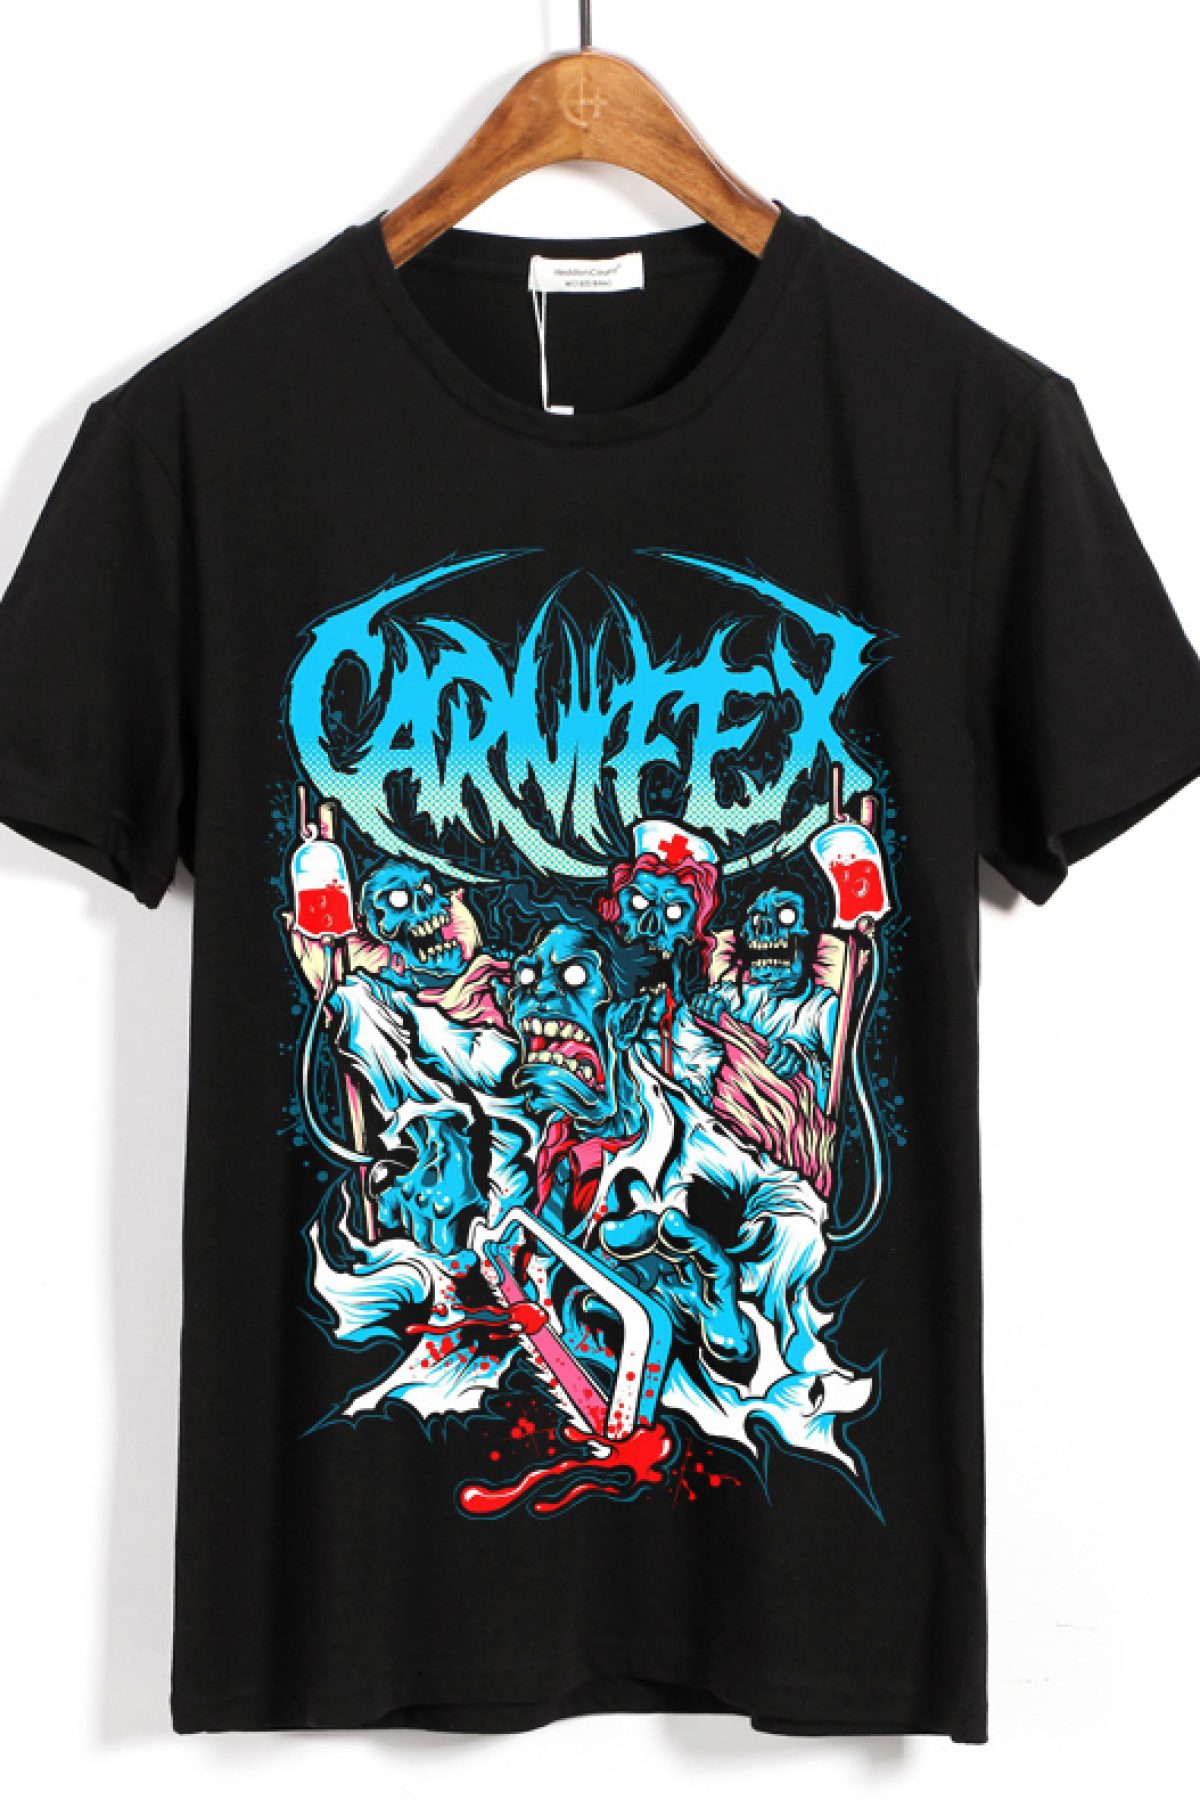 carnifex t shirt